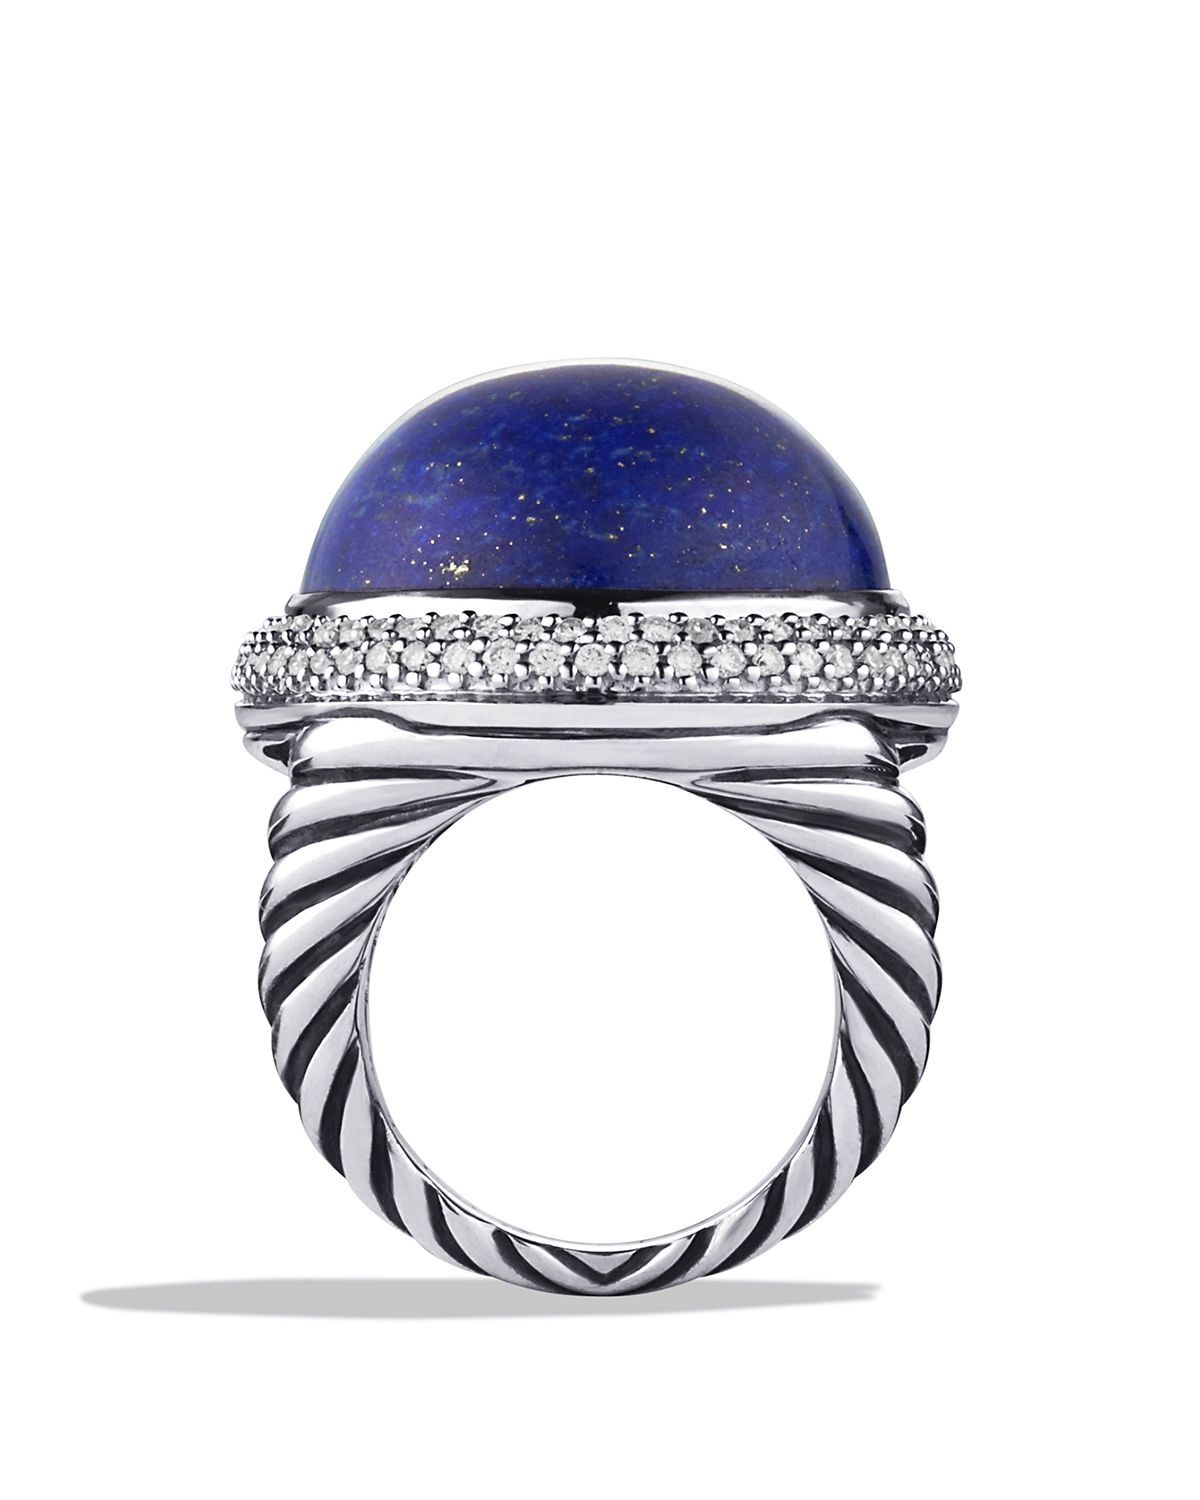 David Yurman Silver Dy Signature Oval Ring With Lapis Lazuli Diamonds Product 1 16938945 1 352480800 Normal 